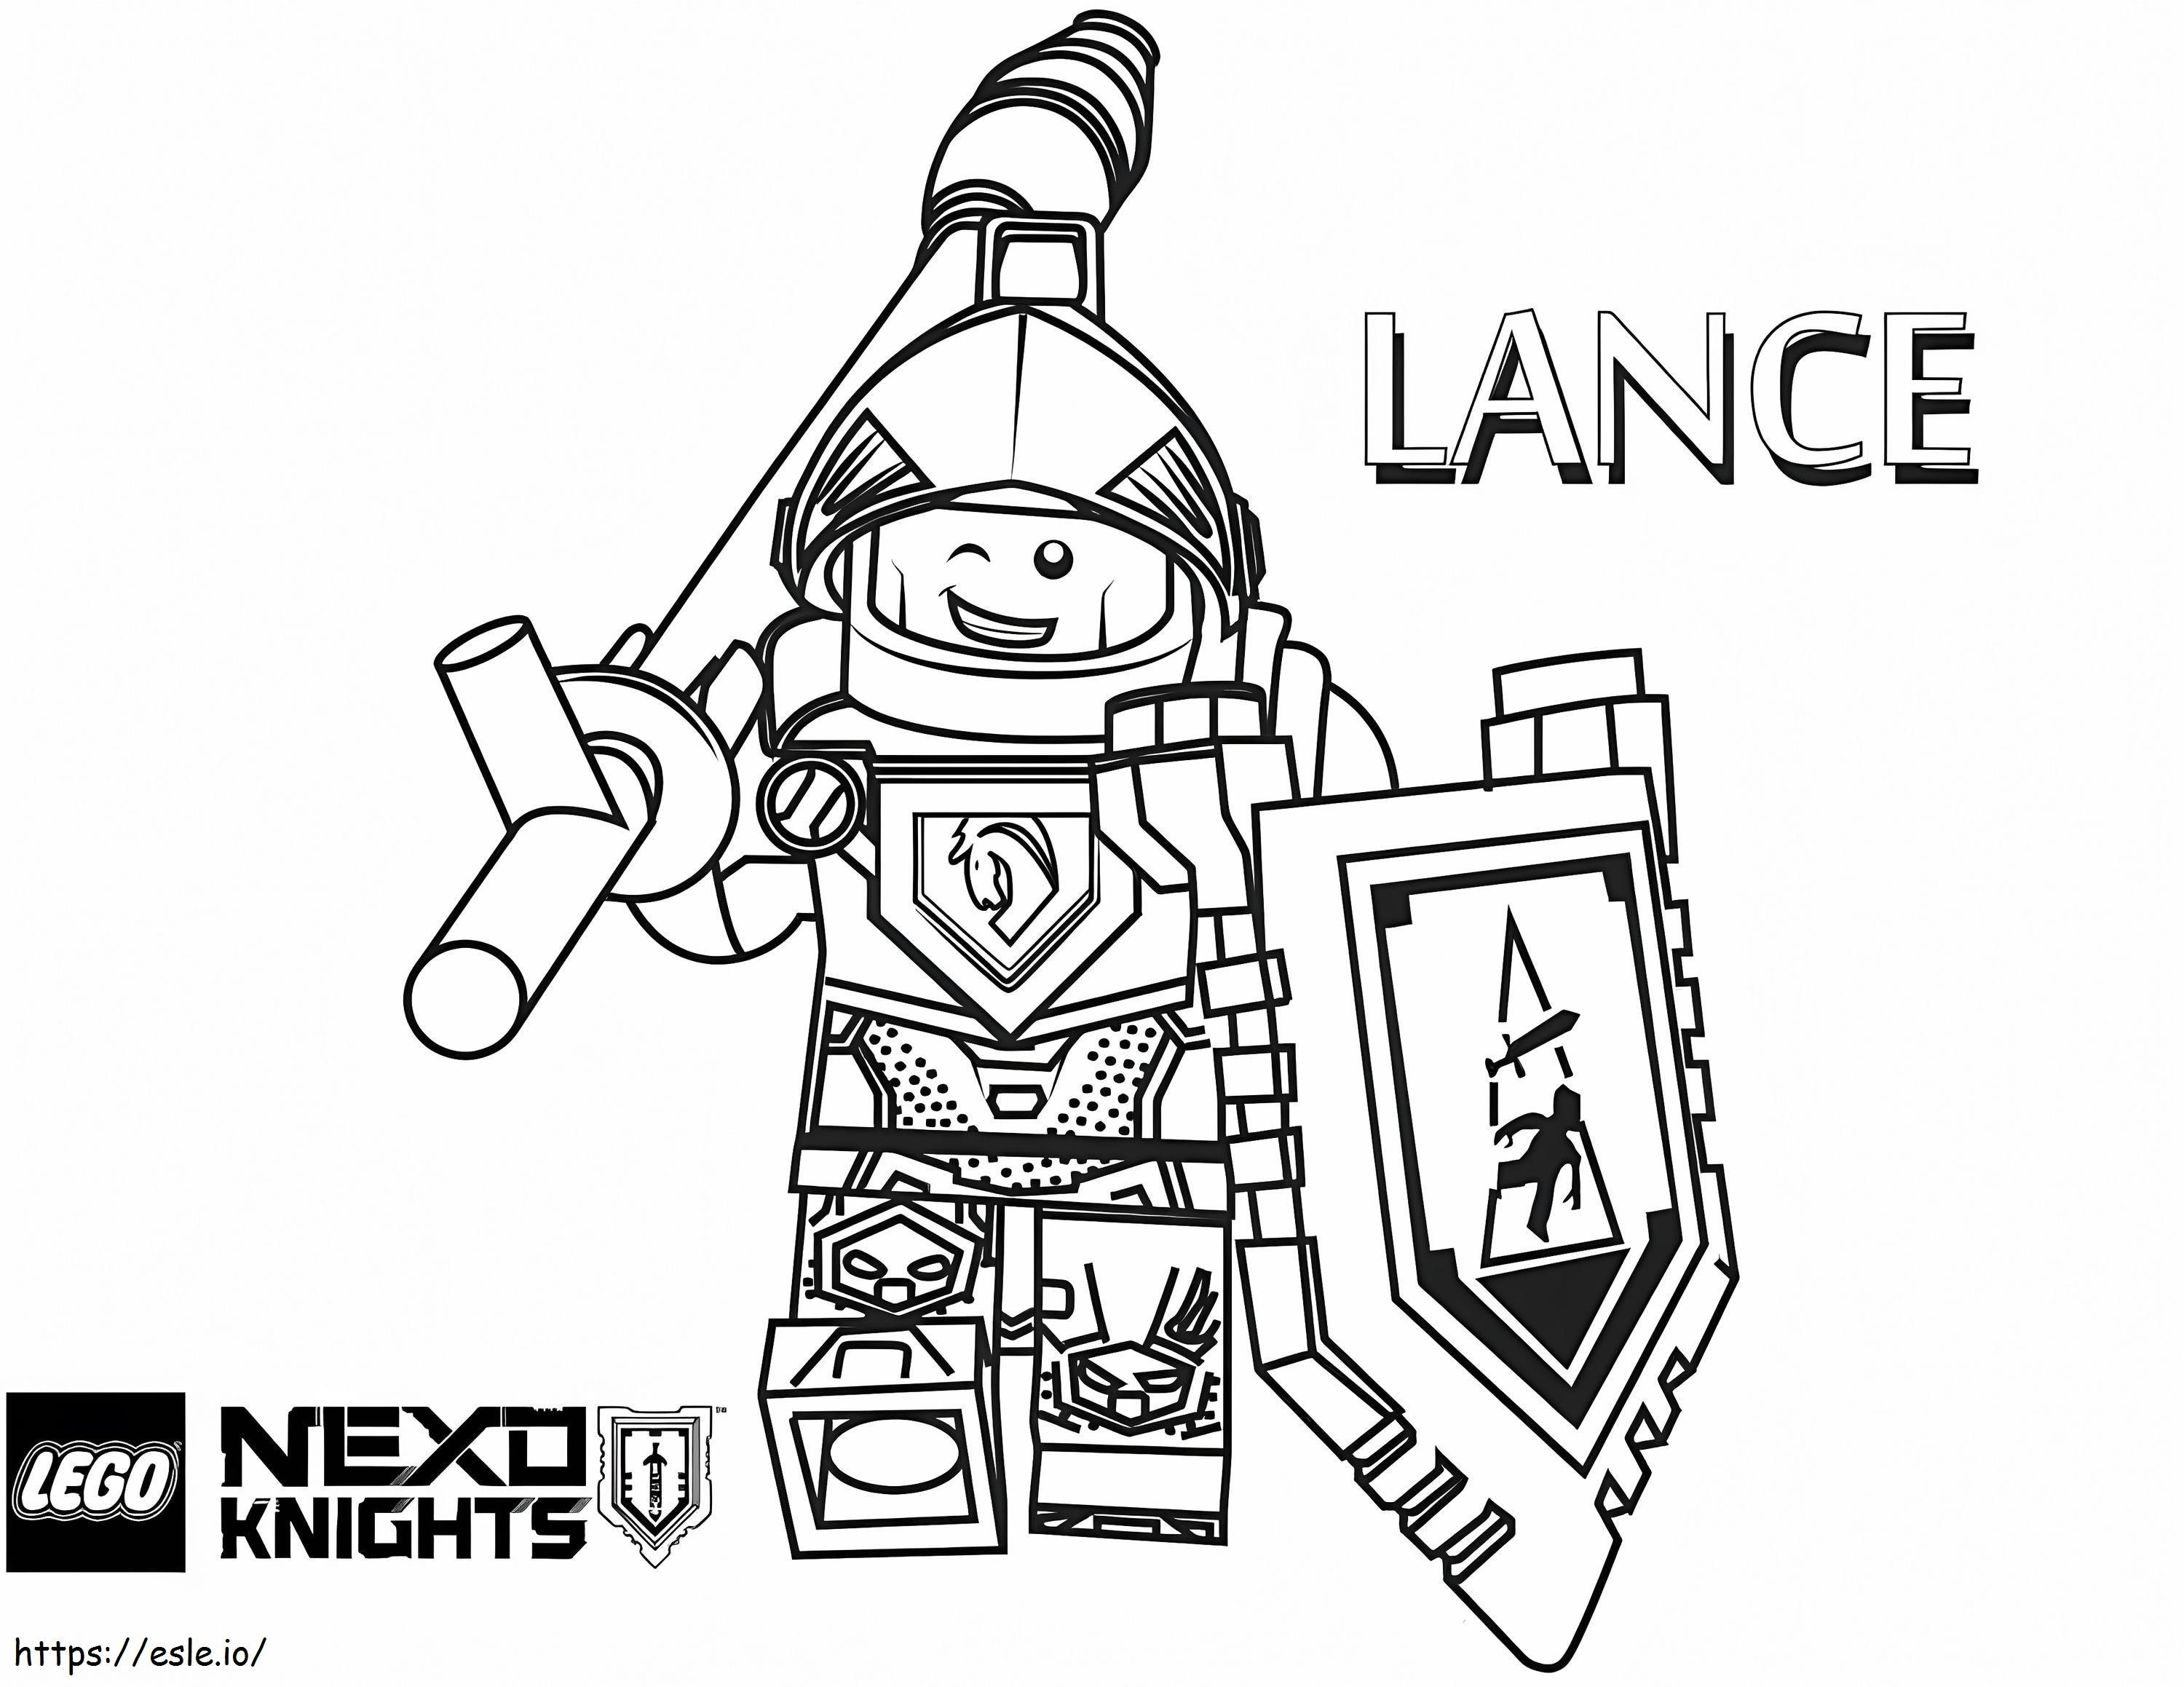 Lance Nexo Knights coloring page